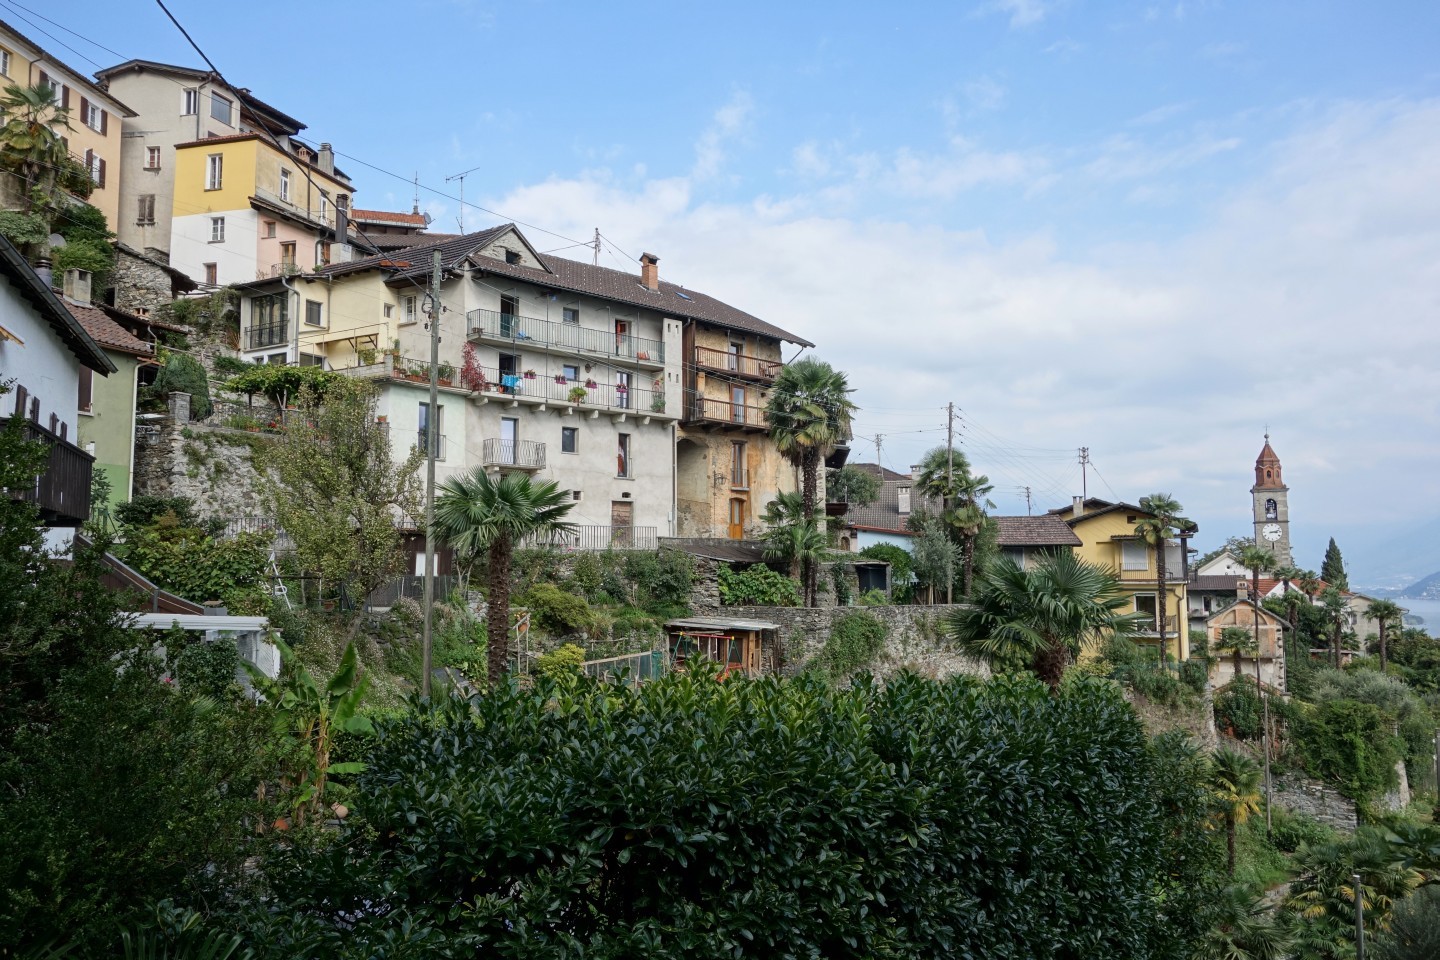 Ronco sopra Ascona - Ansicht